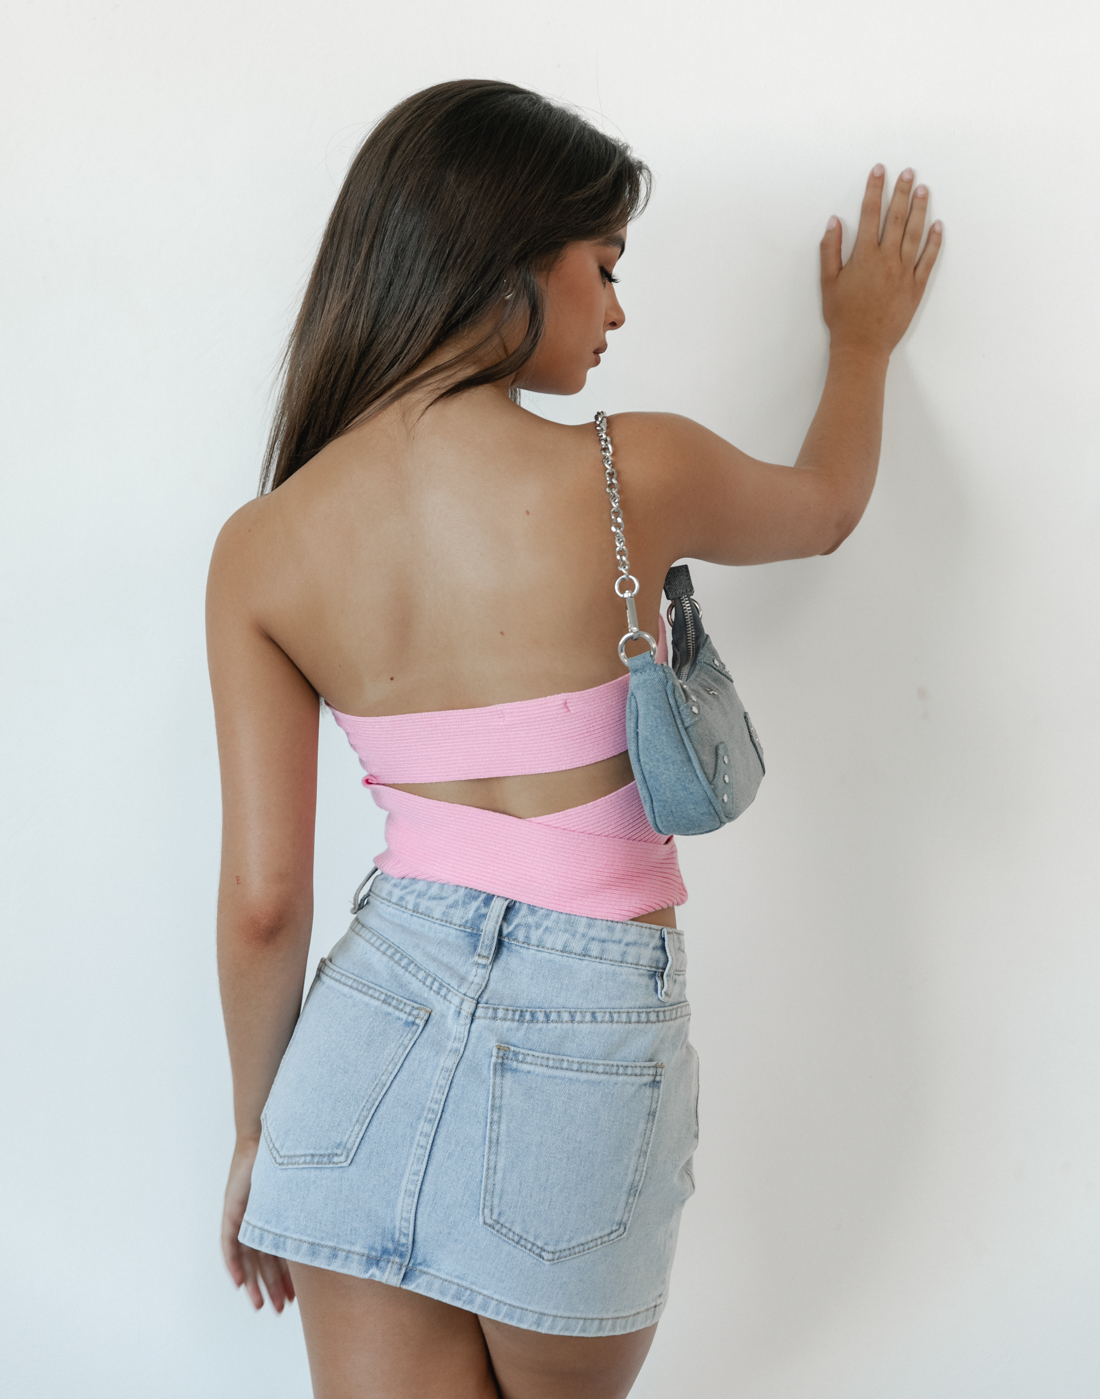 Nickita Knit Crop Top (Pink) - Back Detailing Knit Top - Women's Top - Charcoal Clothing